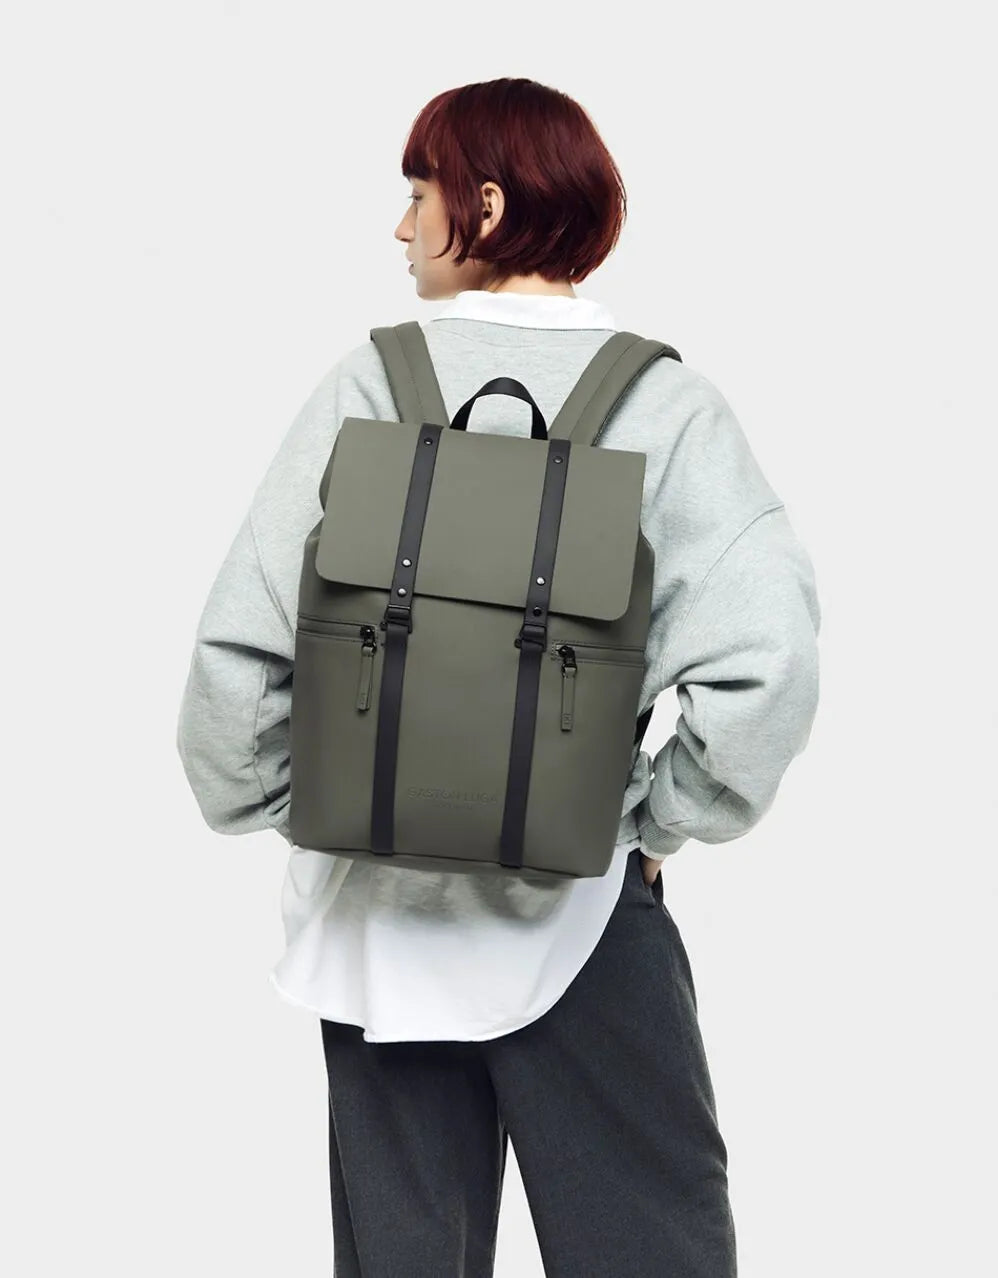 Spläsh 2.0 13” Backpack Olive